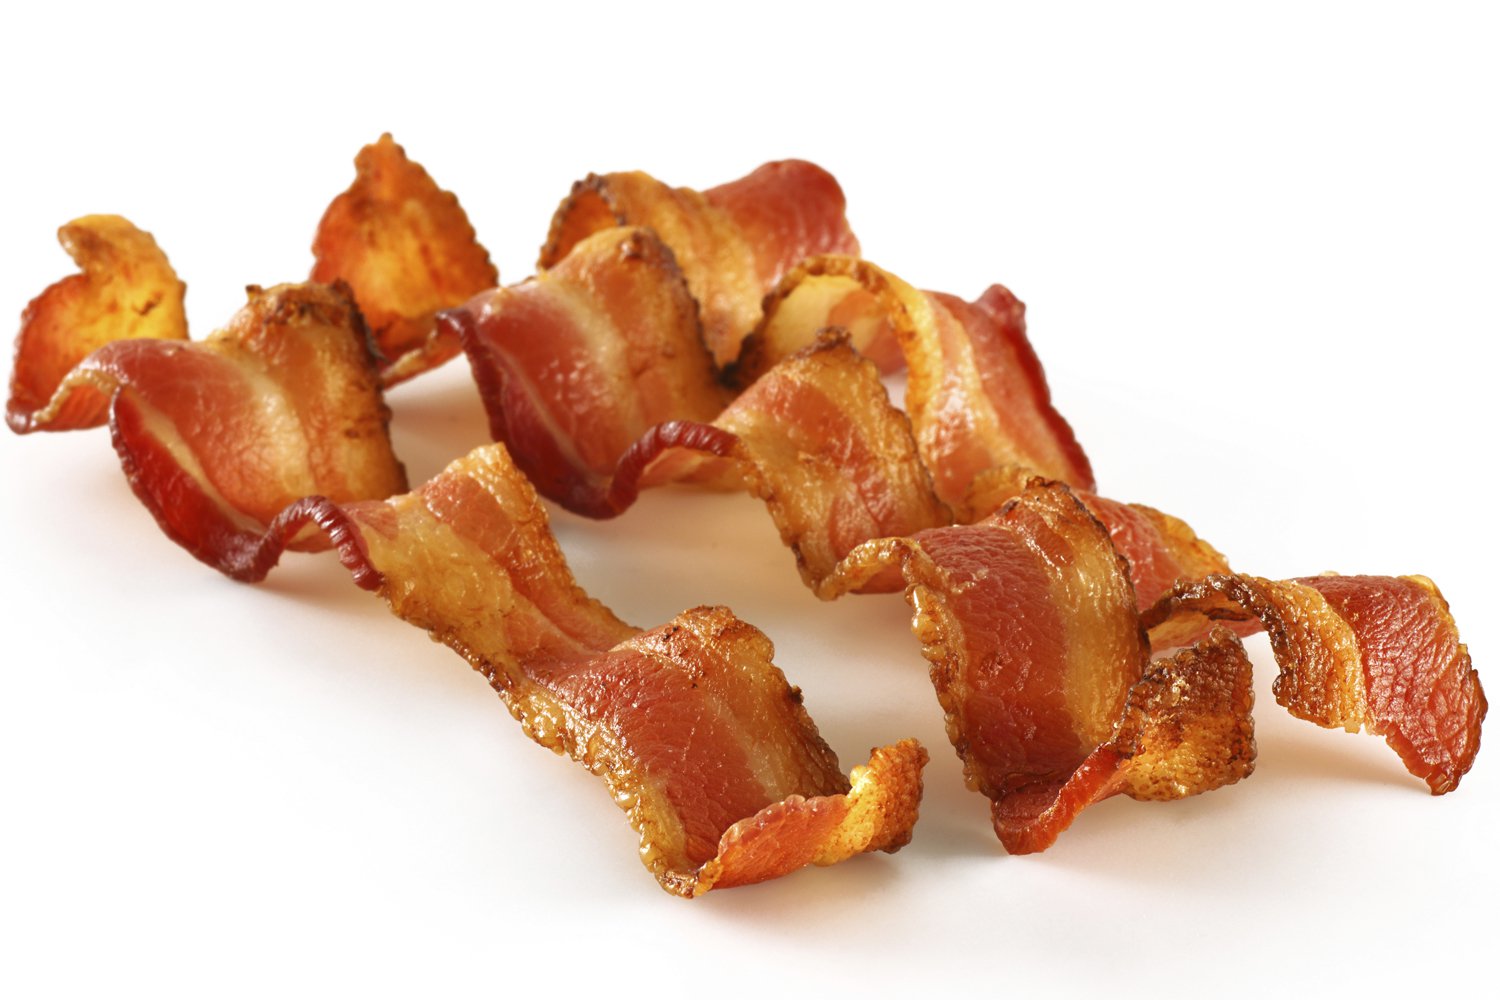 Oscar mayer dating app. Bacon clipart bacon bit